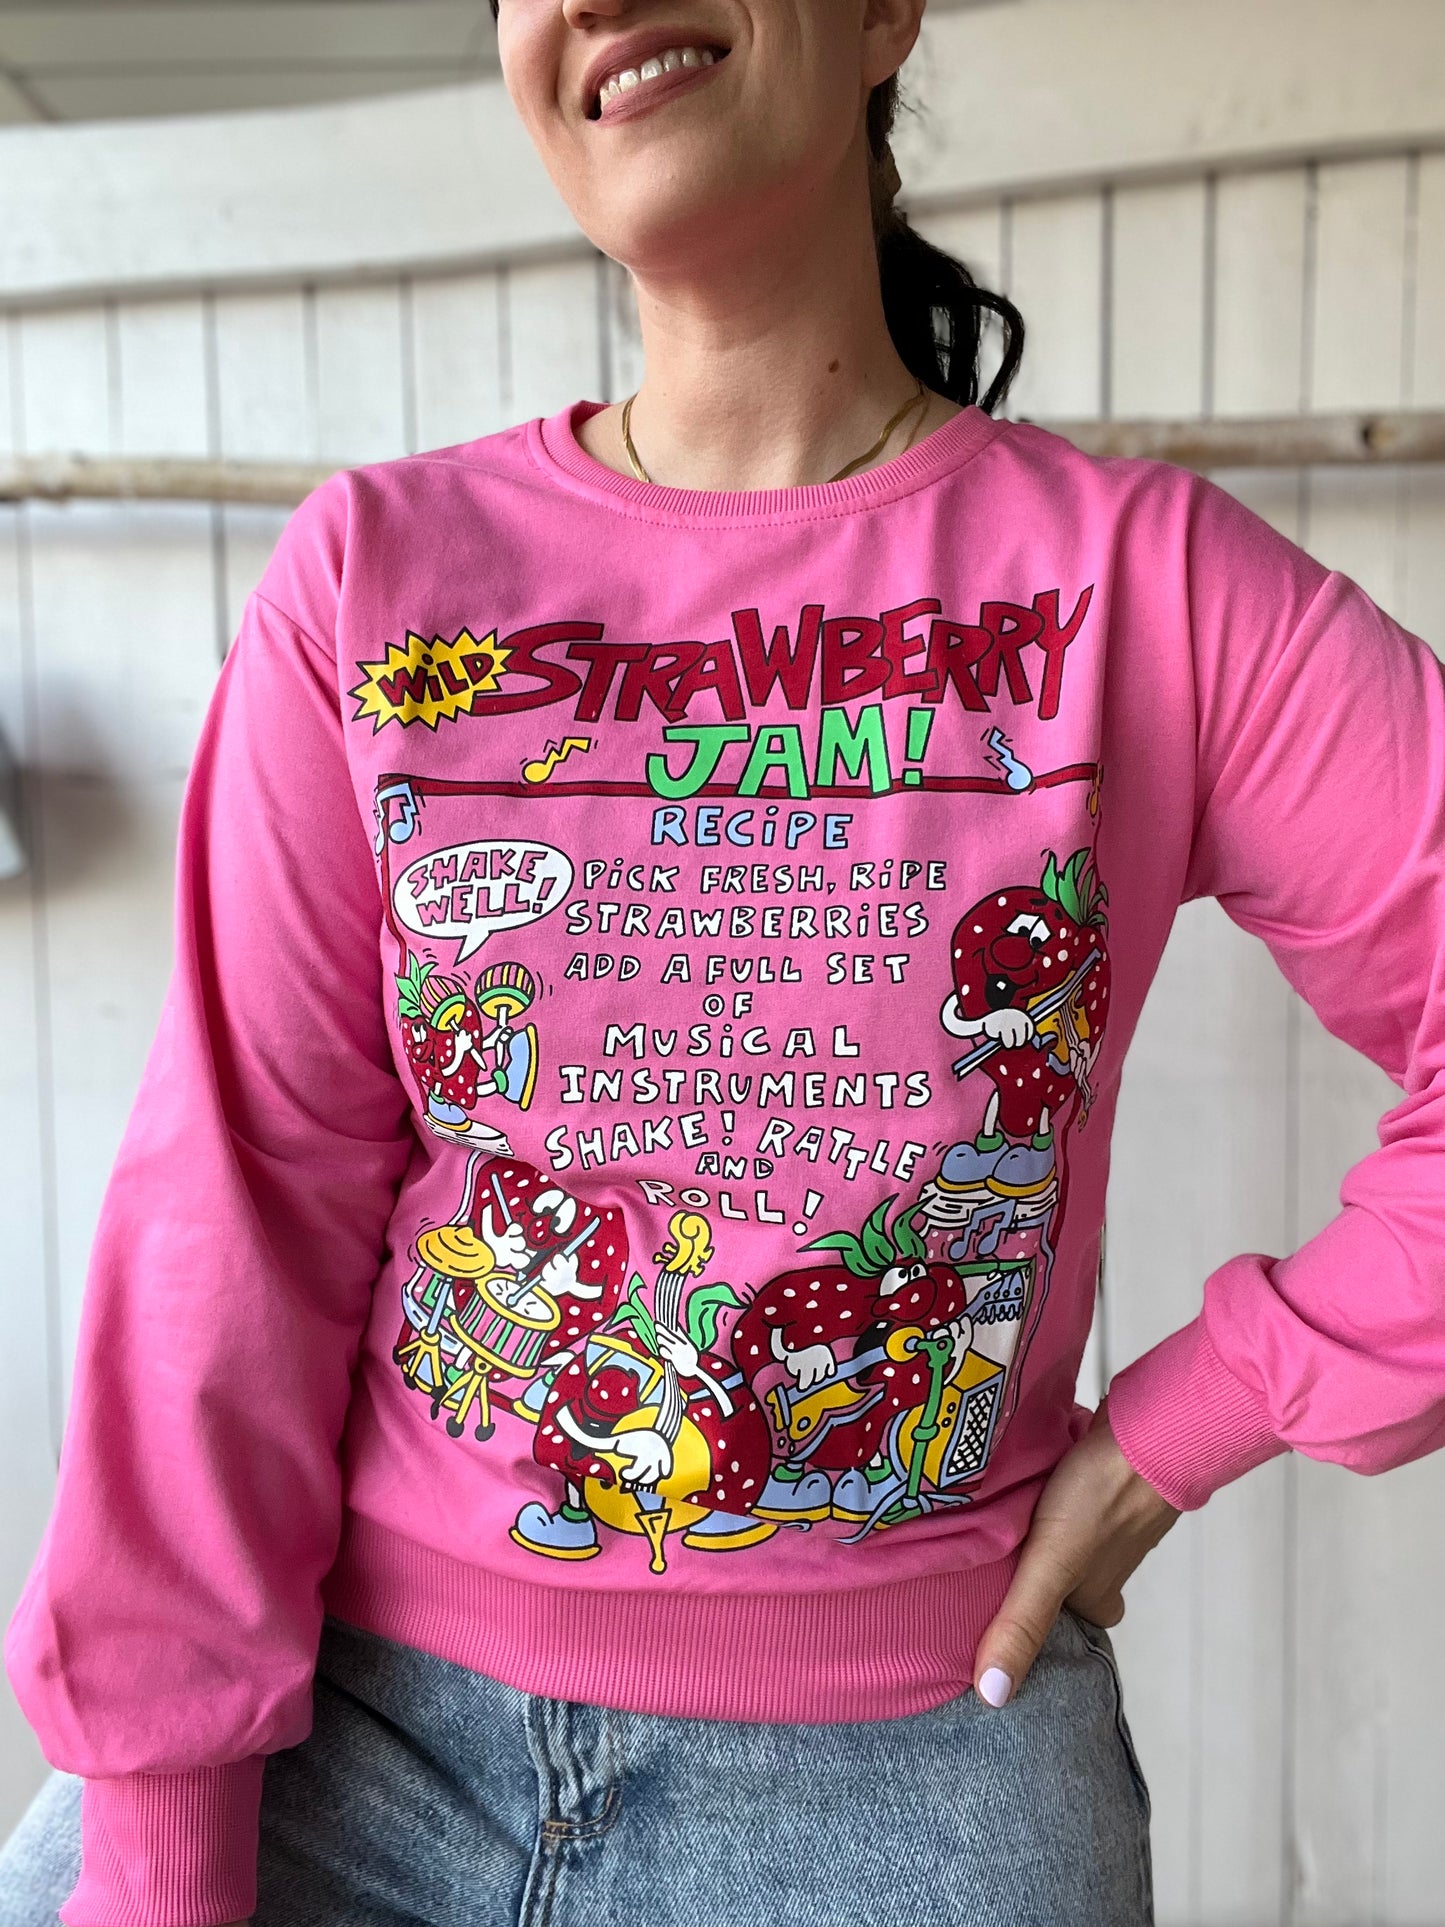 Strawberry Jam Sweater - Size M/L